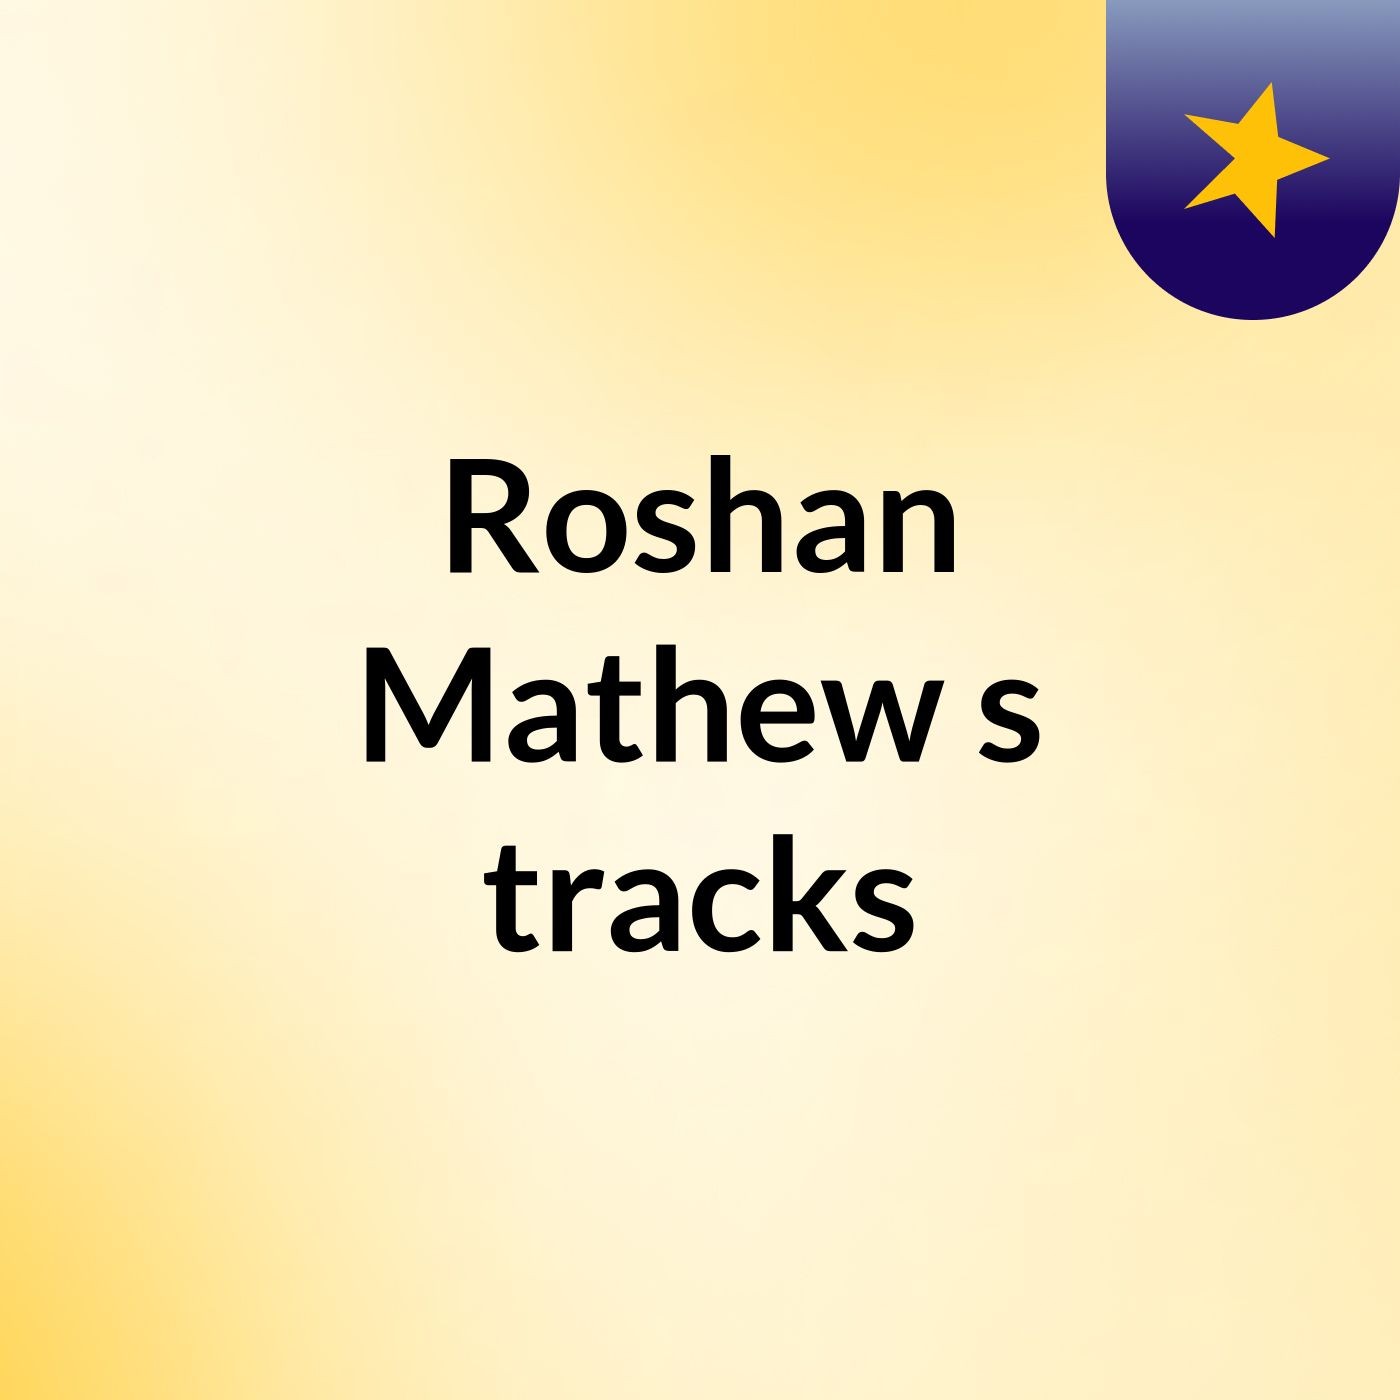 Roshan Mathew's tracks